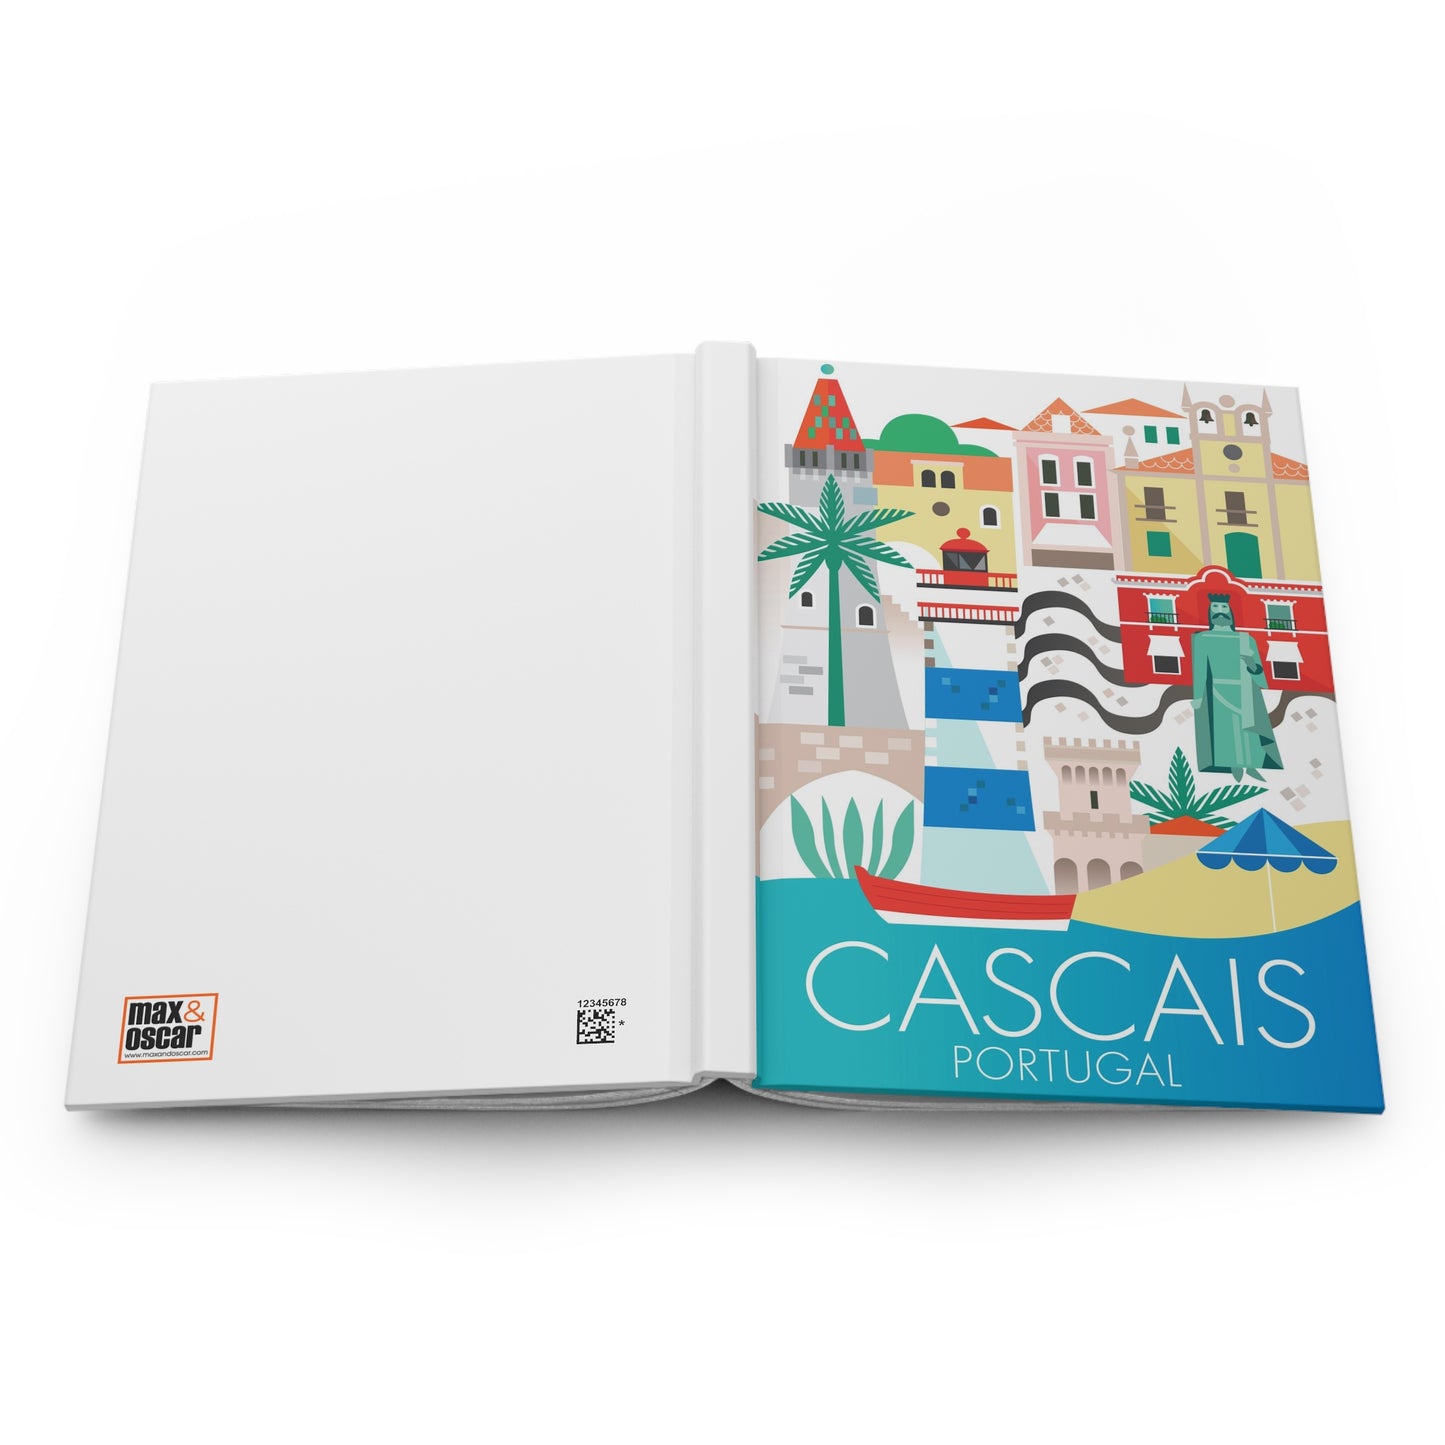 Cascais Hardcover Journal